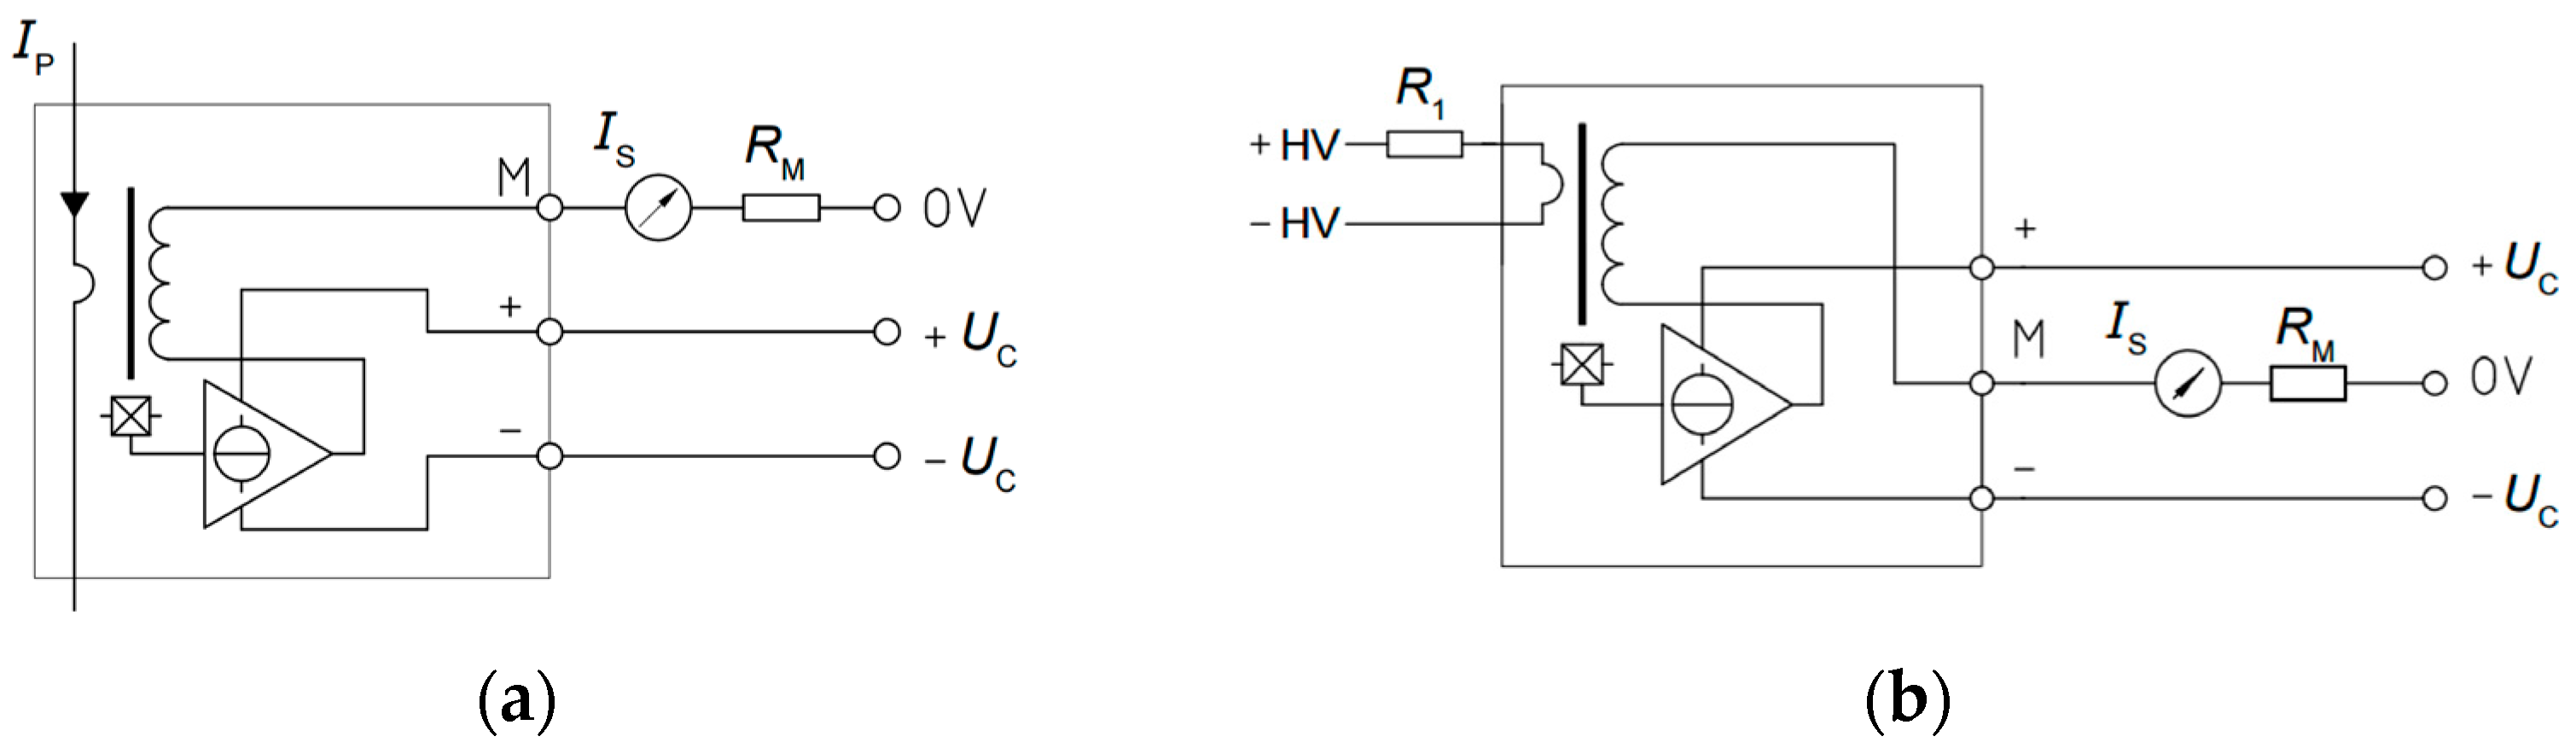 lv 25 p voltage sensor